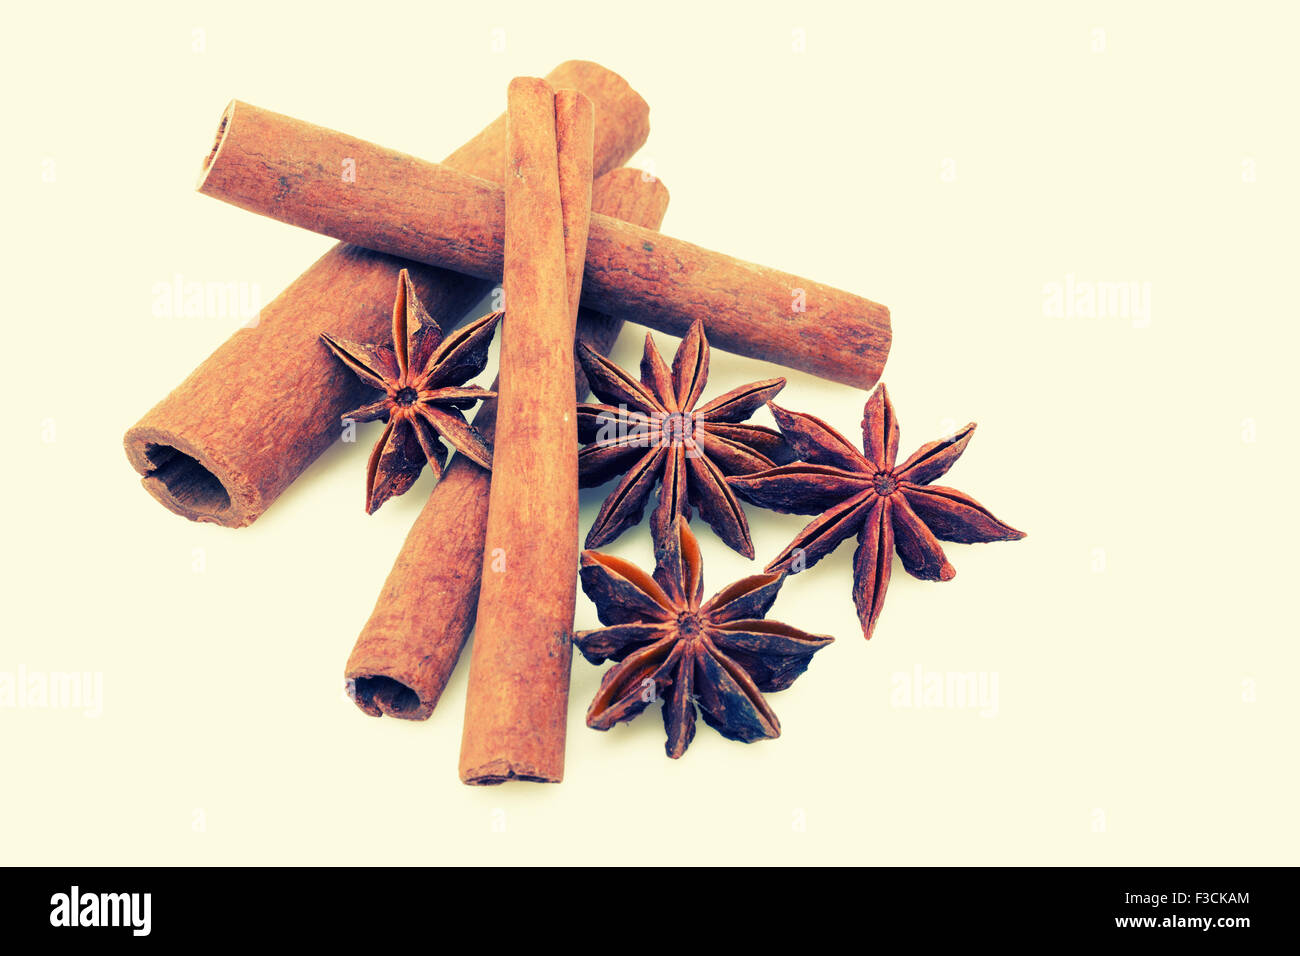 Star anise with cinnamon sticks on white Stock Photo